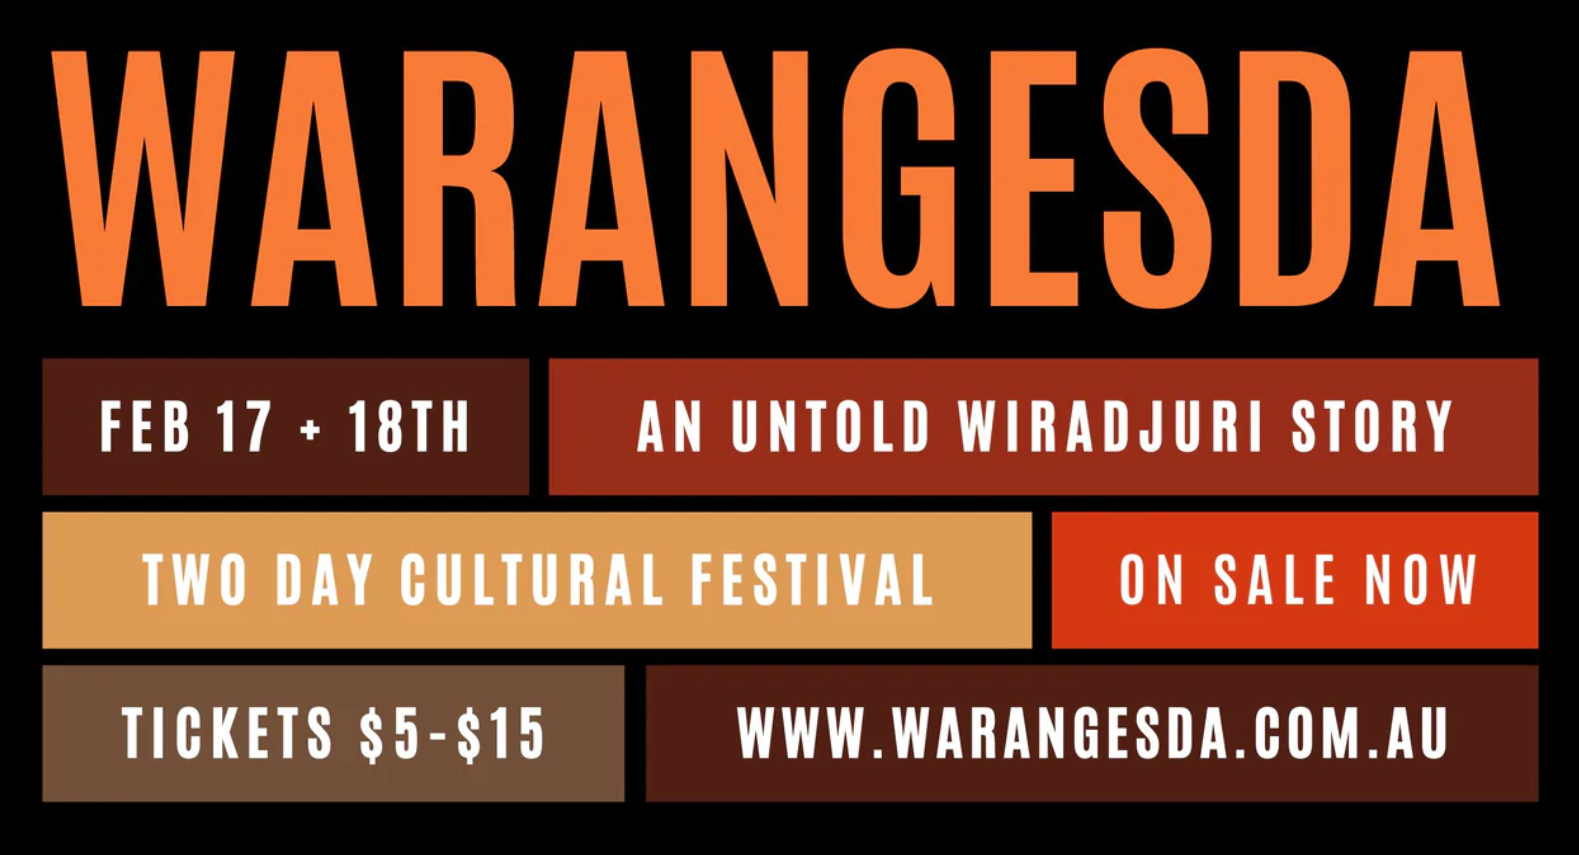 Warangesda Festival